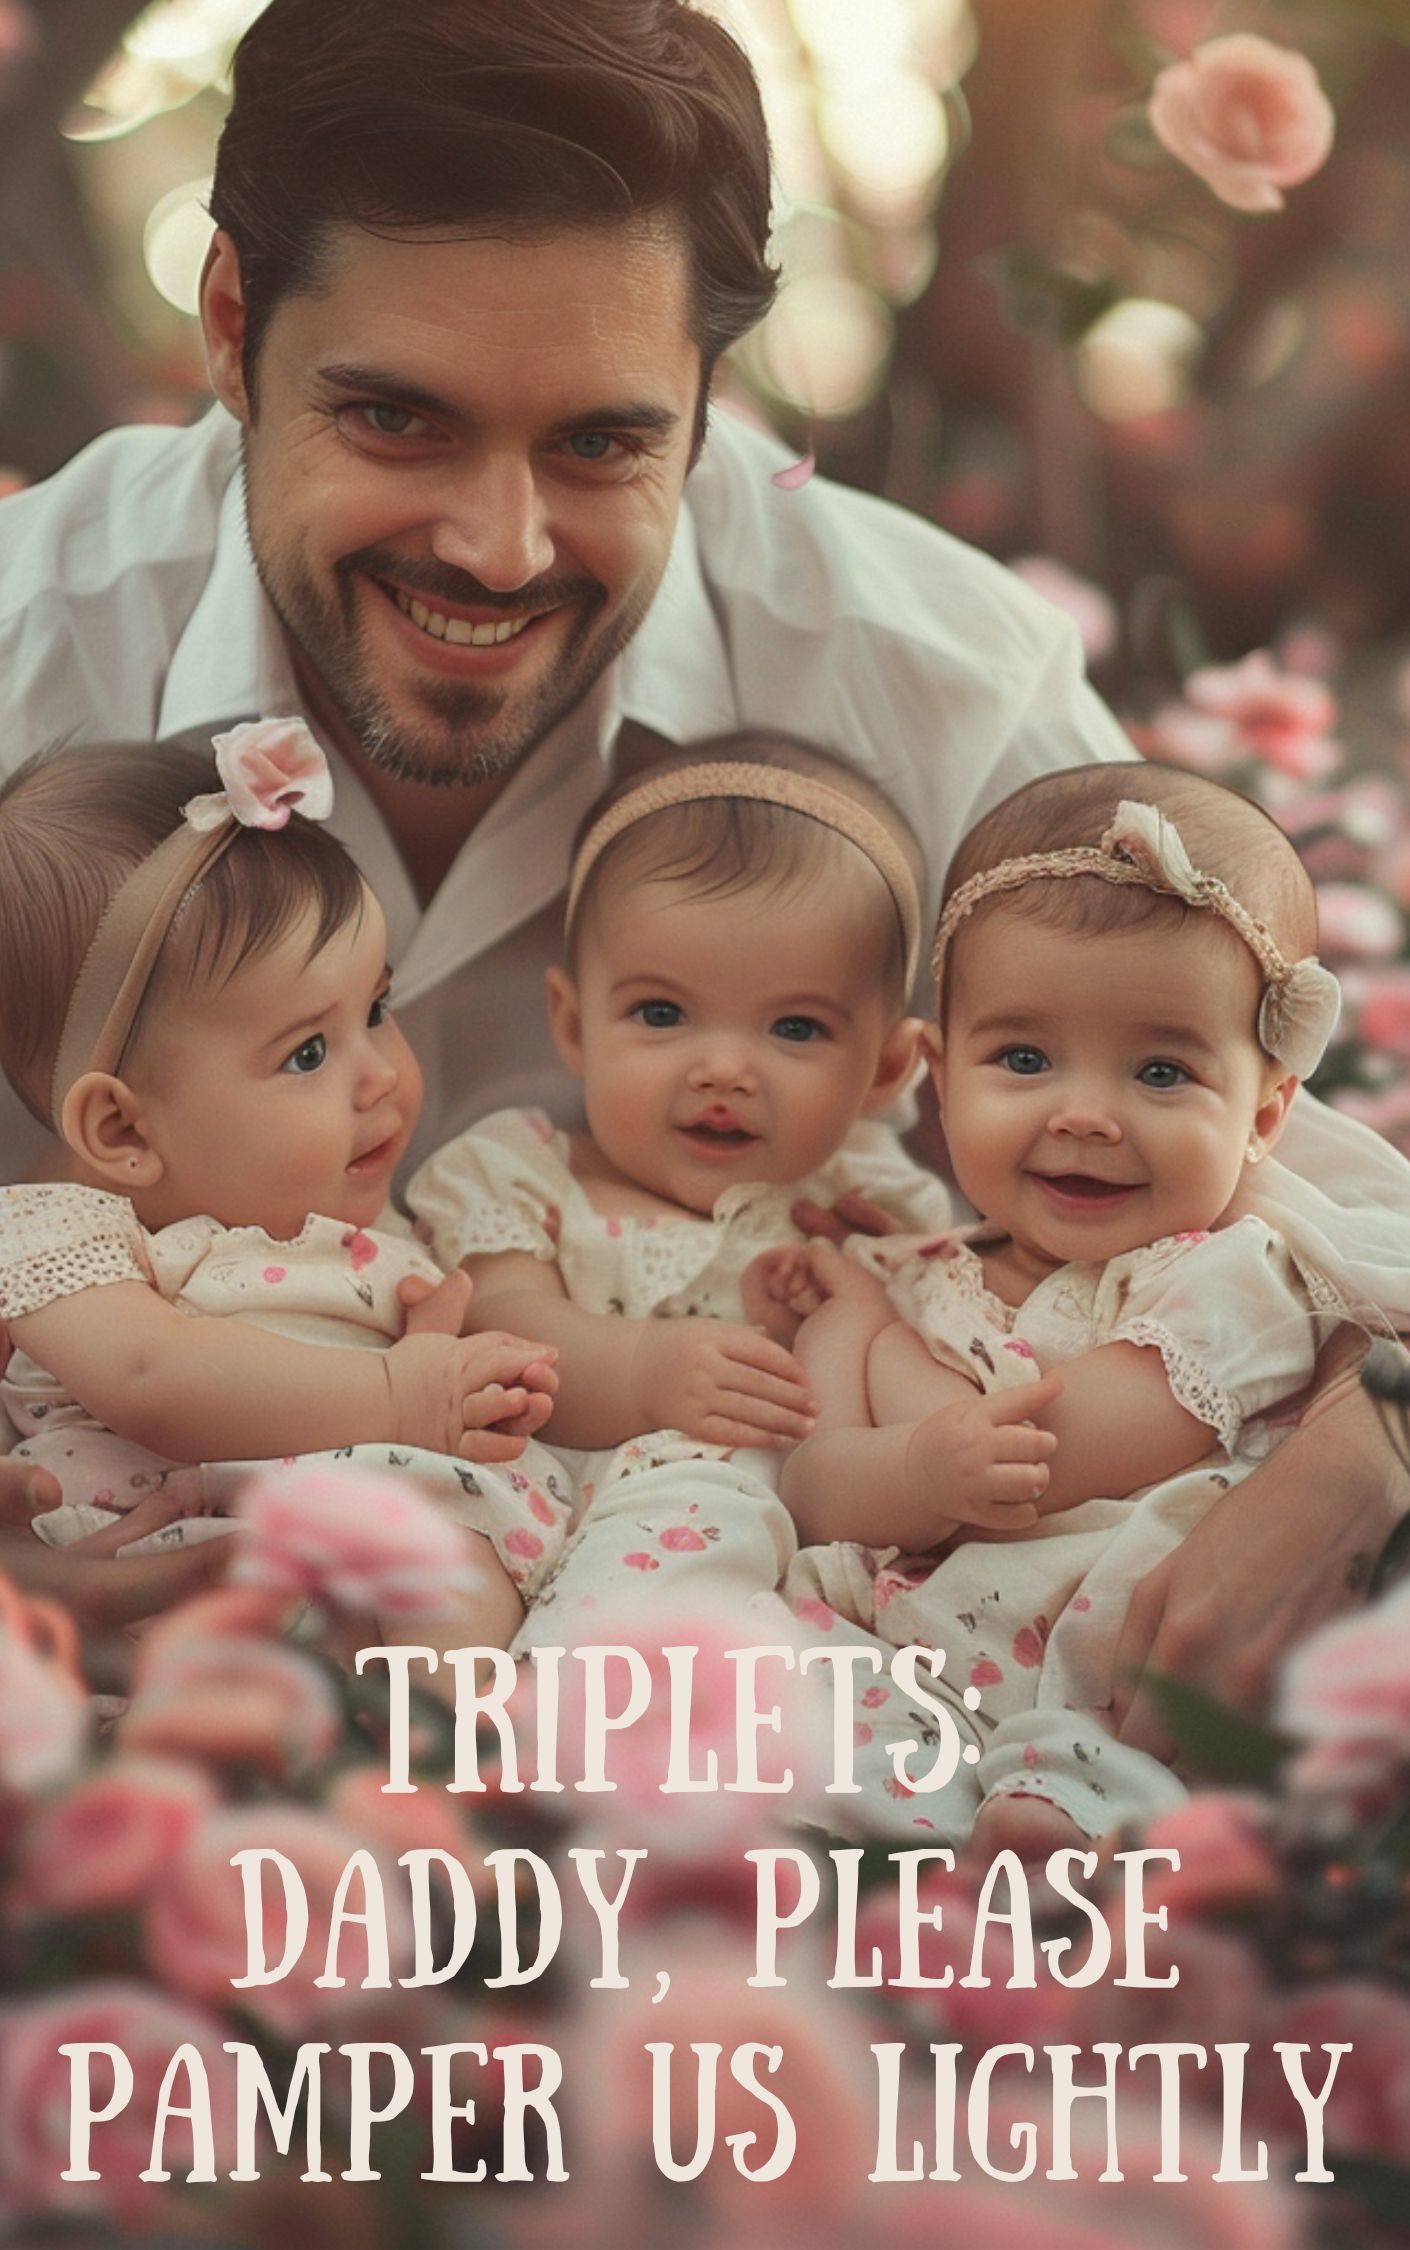 Triplets: Daddy, Please Pamper Us Lightly